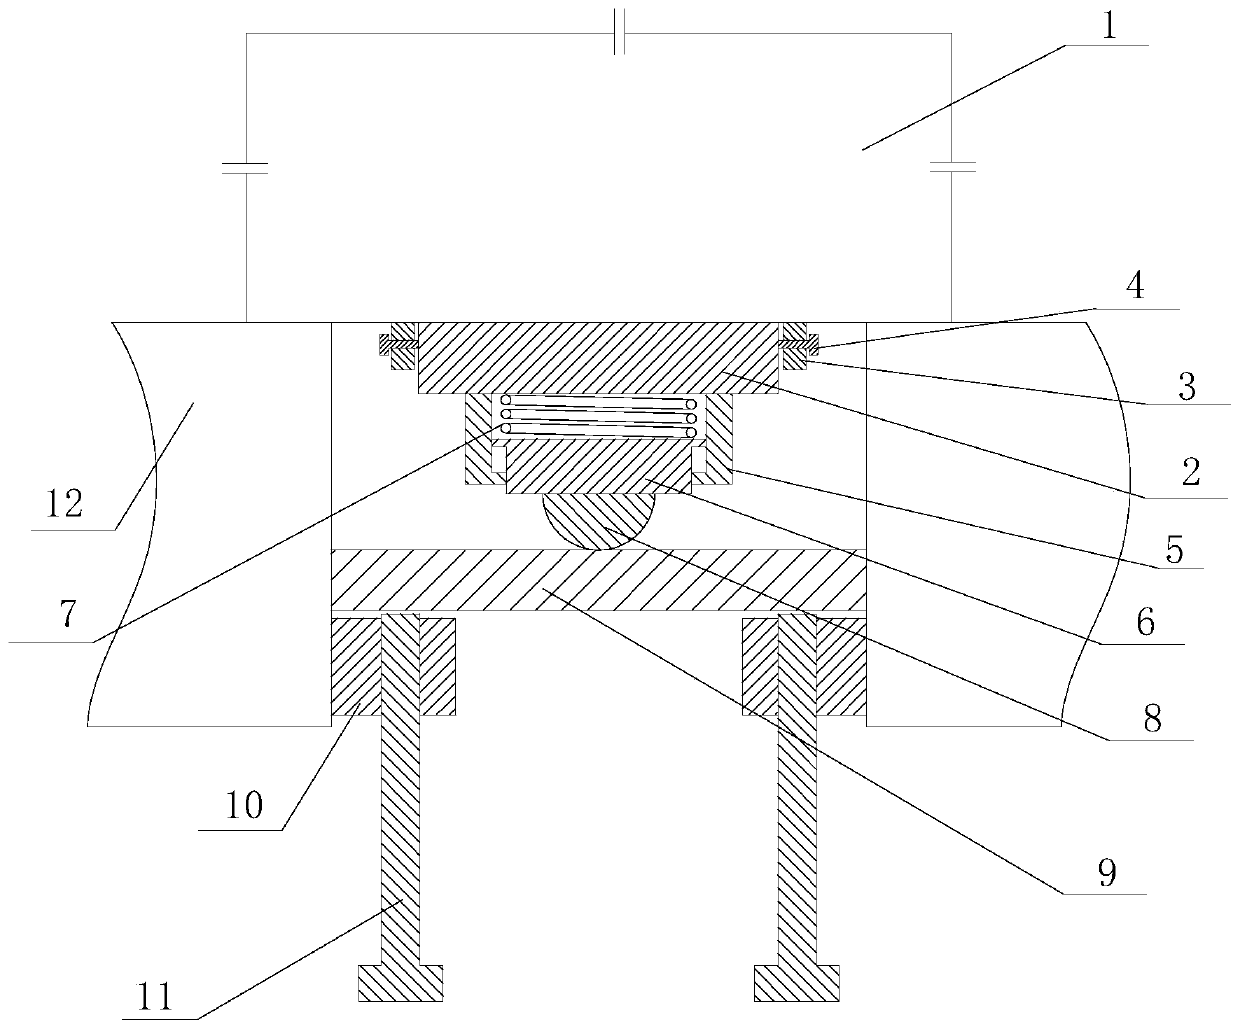 Large-span steel box girder side span folding device and method